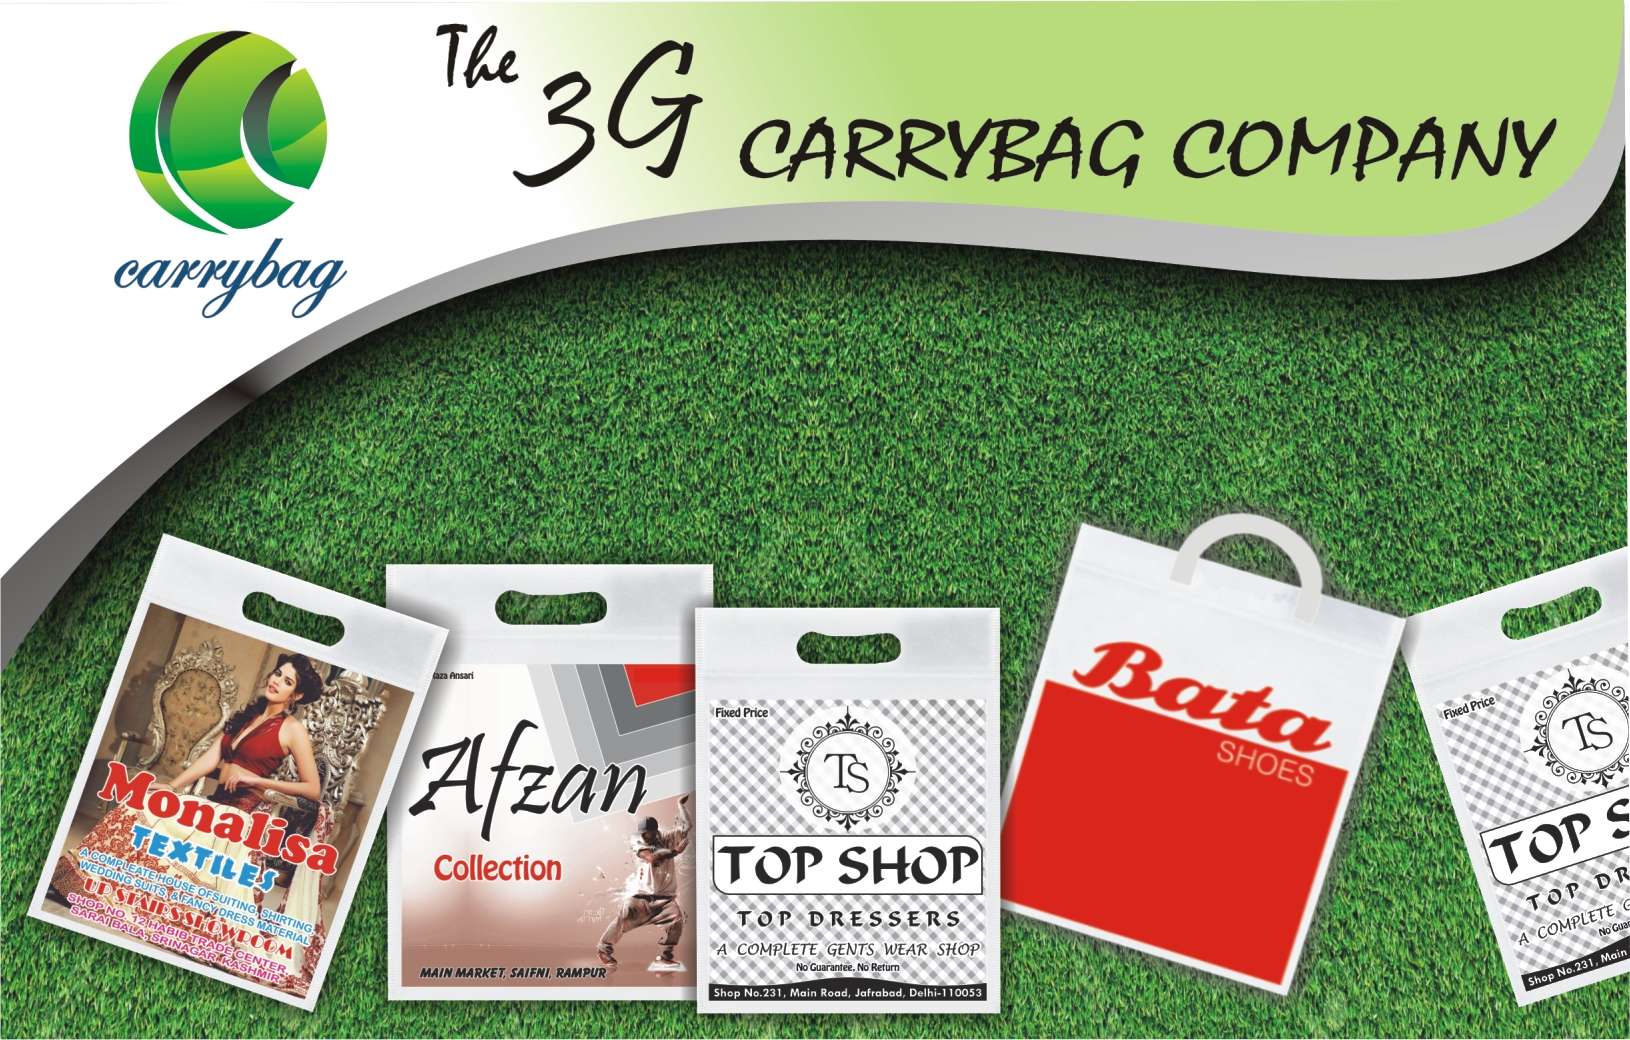 The 3g Carrybag Company